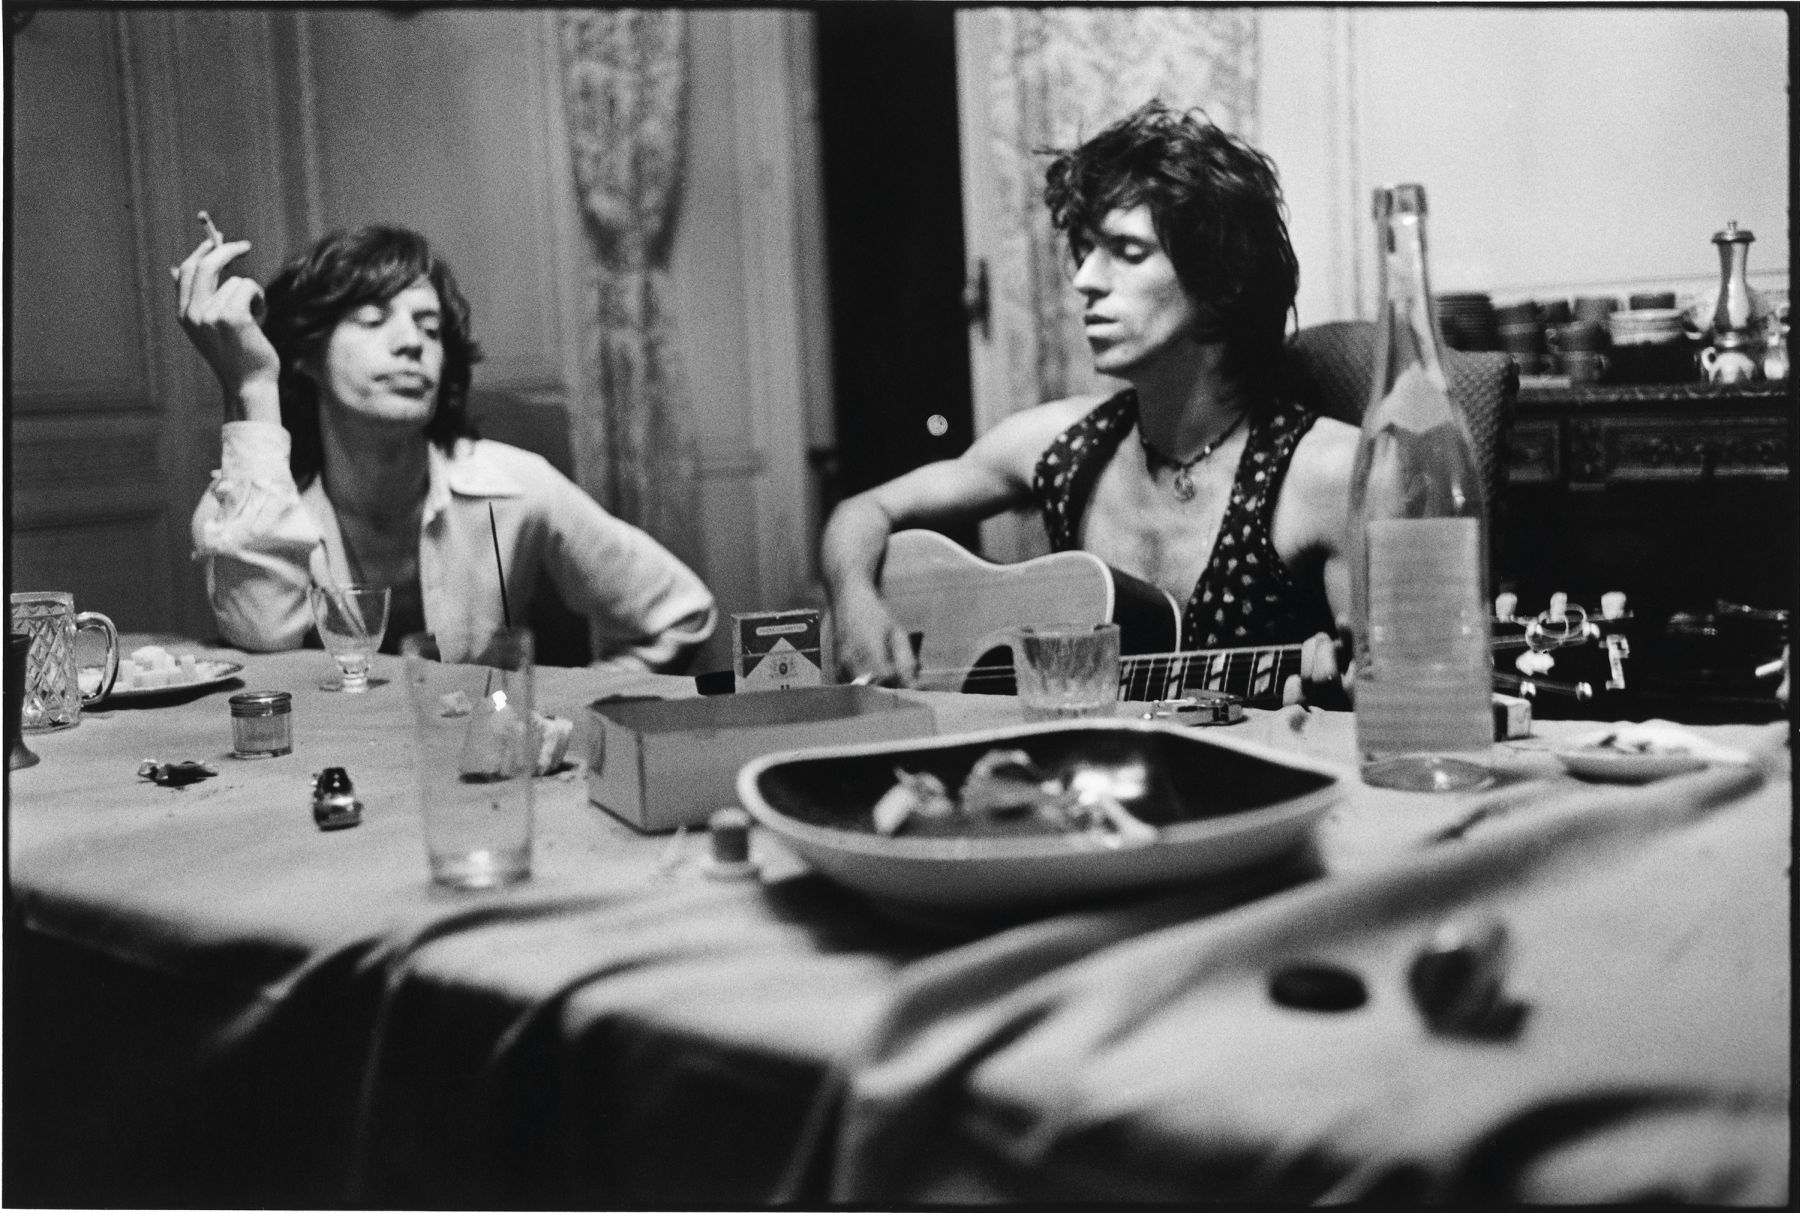 Keith Richards and Mic Jagger